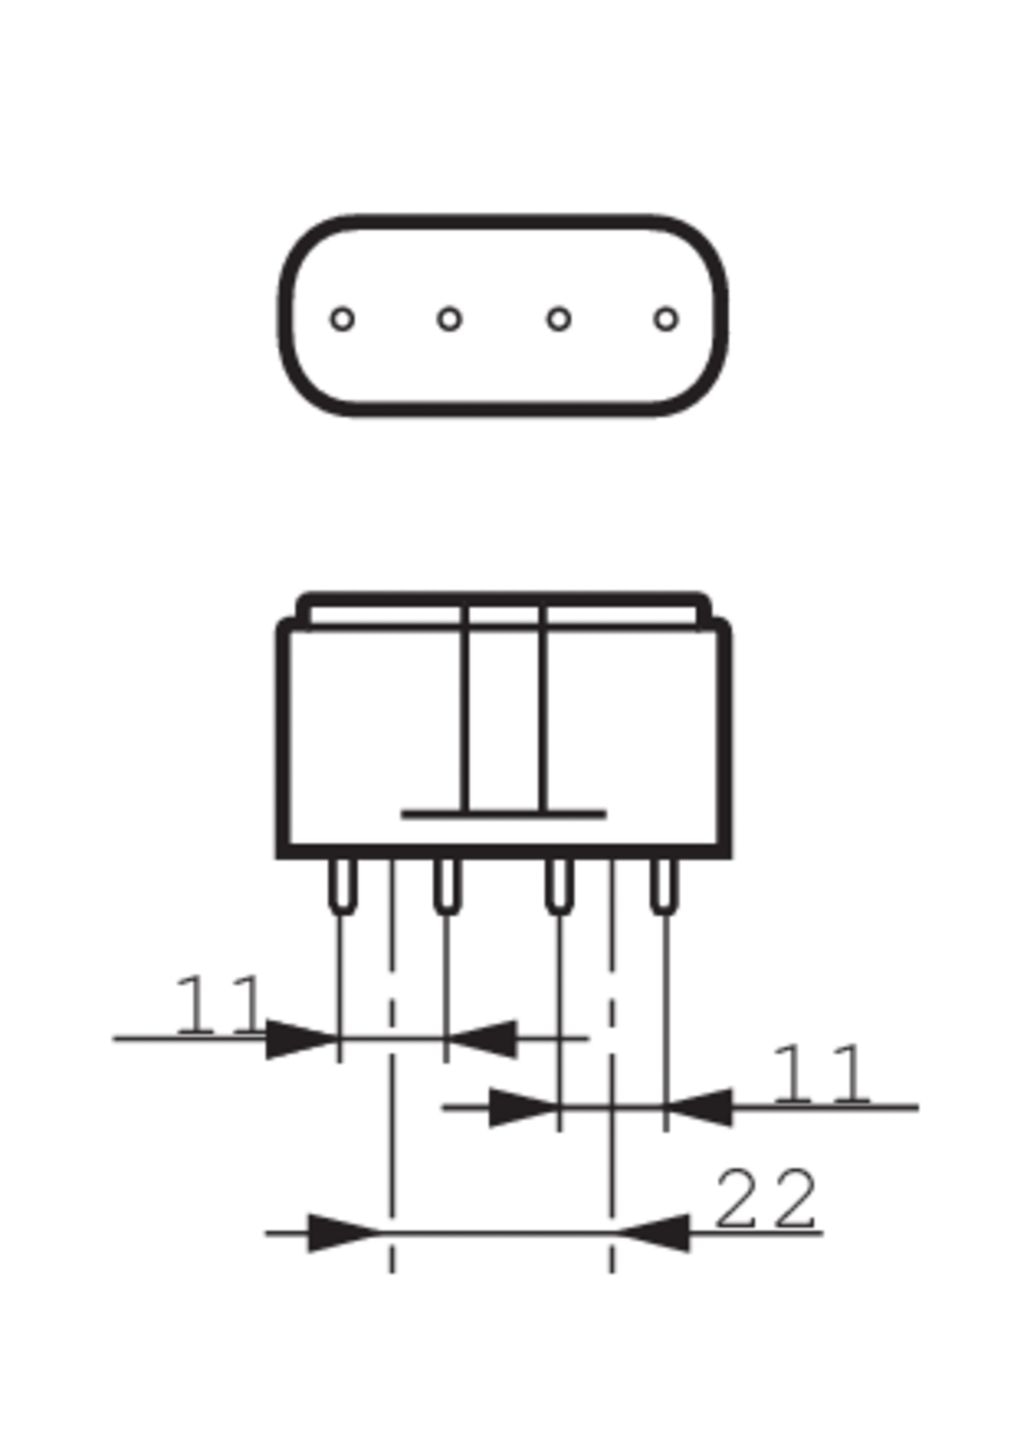 Signify UVC disinfection lamp TUV PL-L 60W/4P HO 1CT/25 (TUV PL-L series)